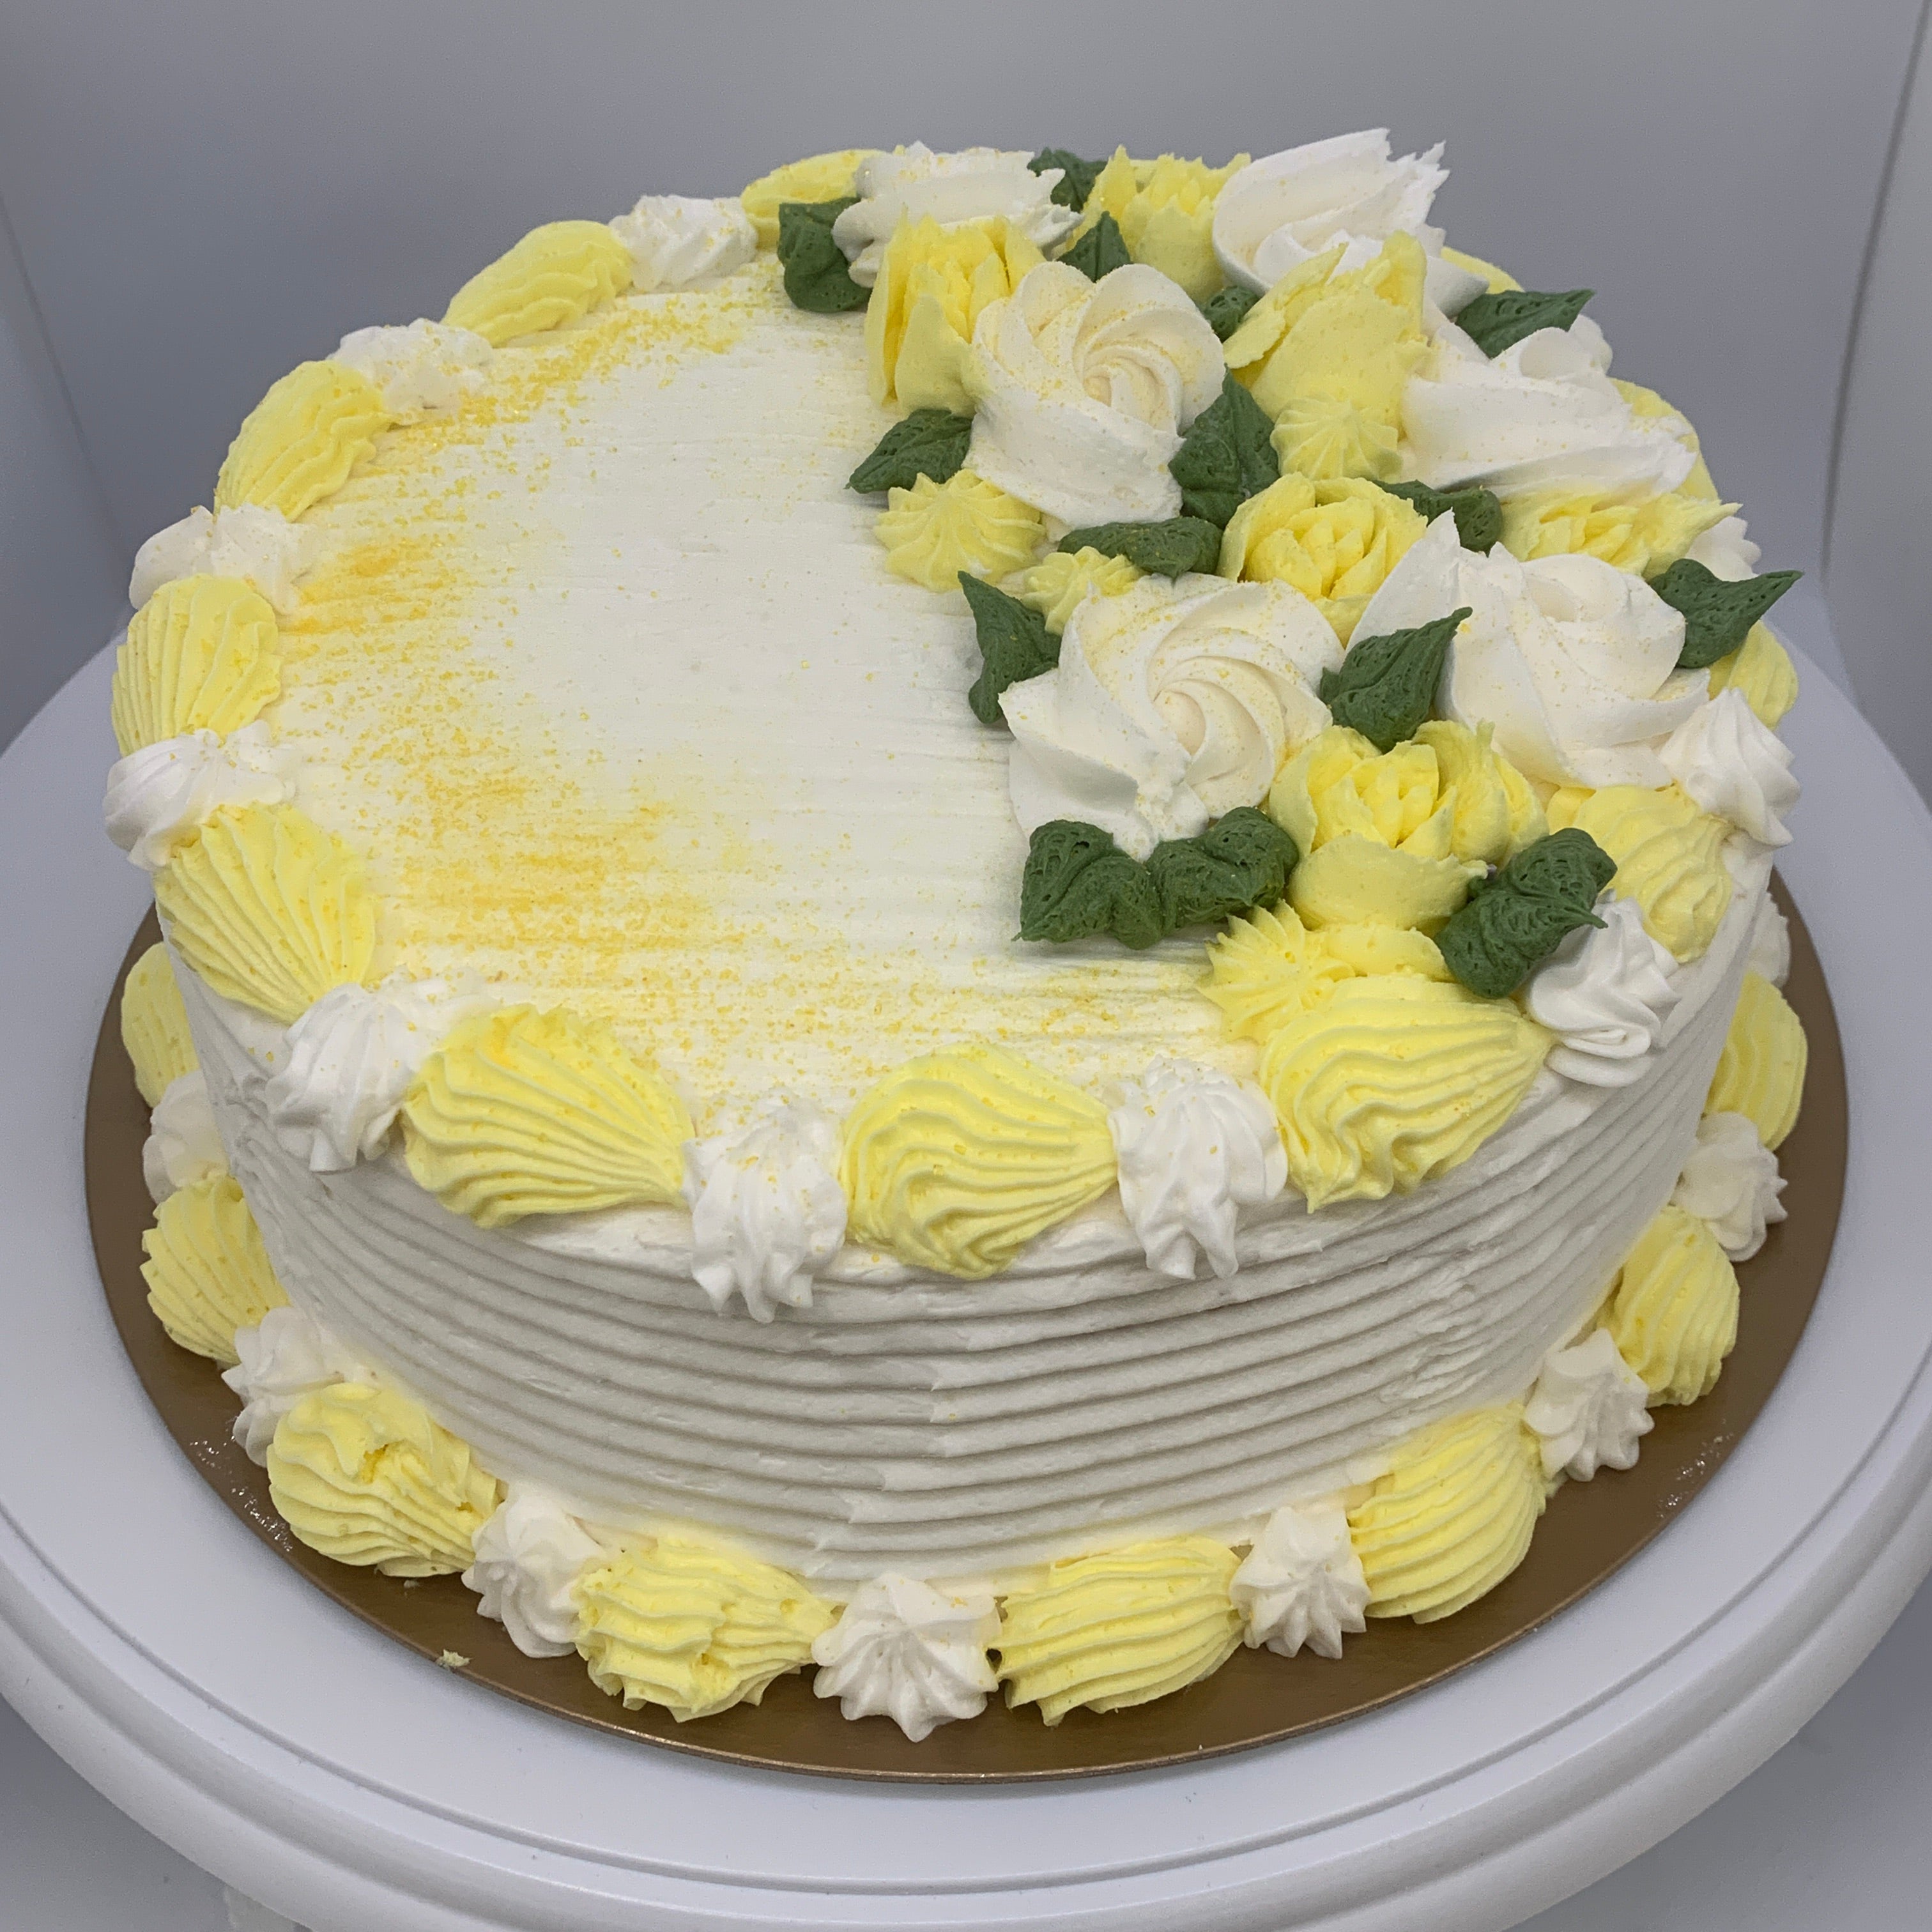 Decorated Cake - Personalized, Round (Chocolate cake)